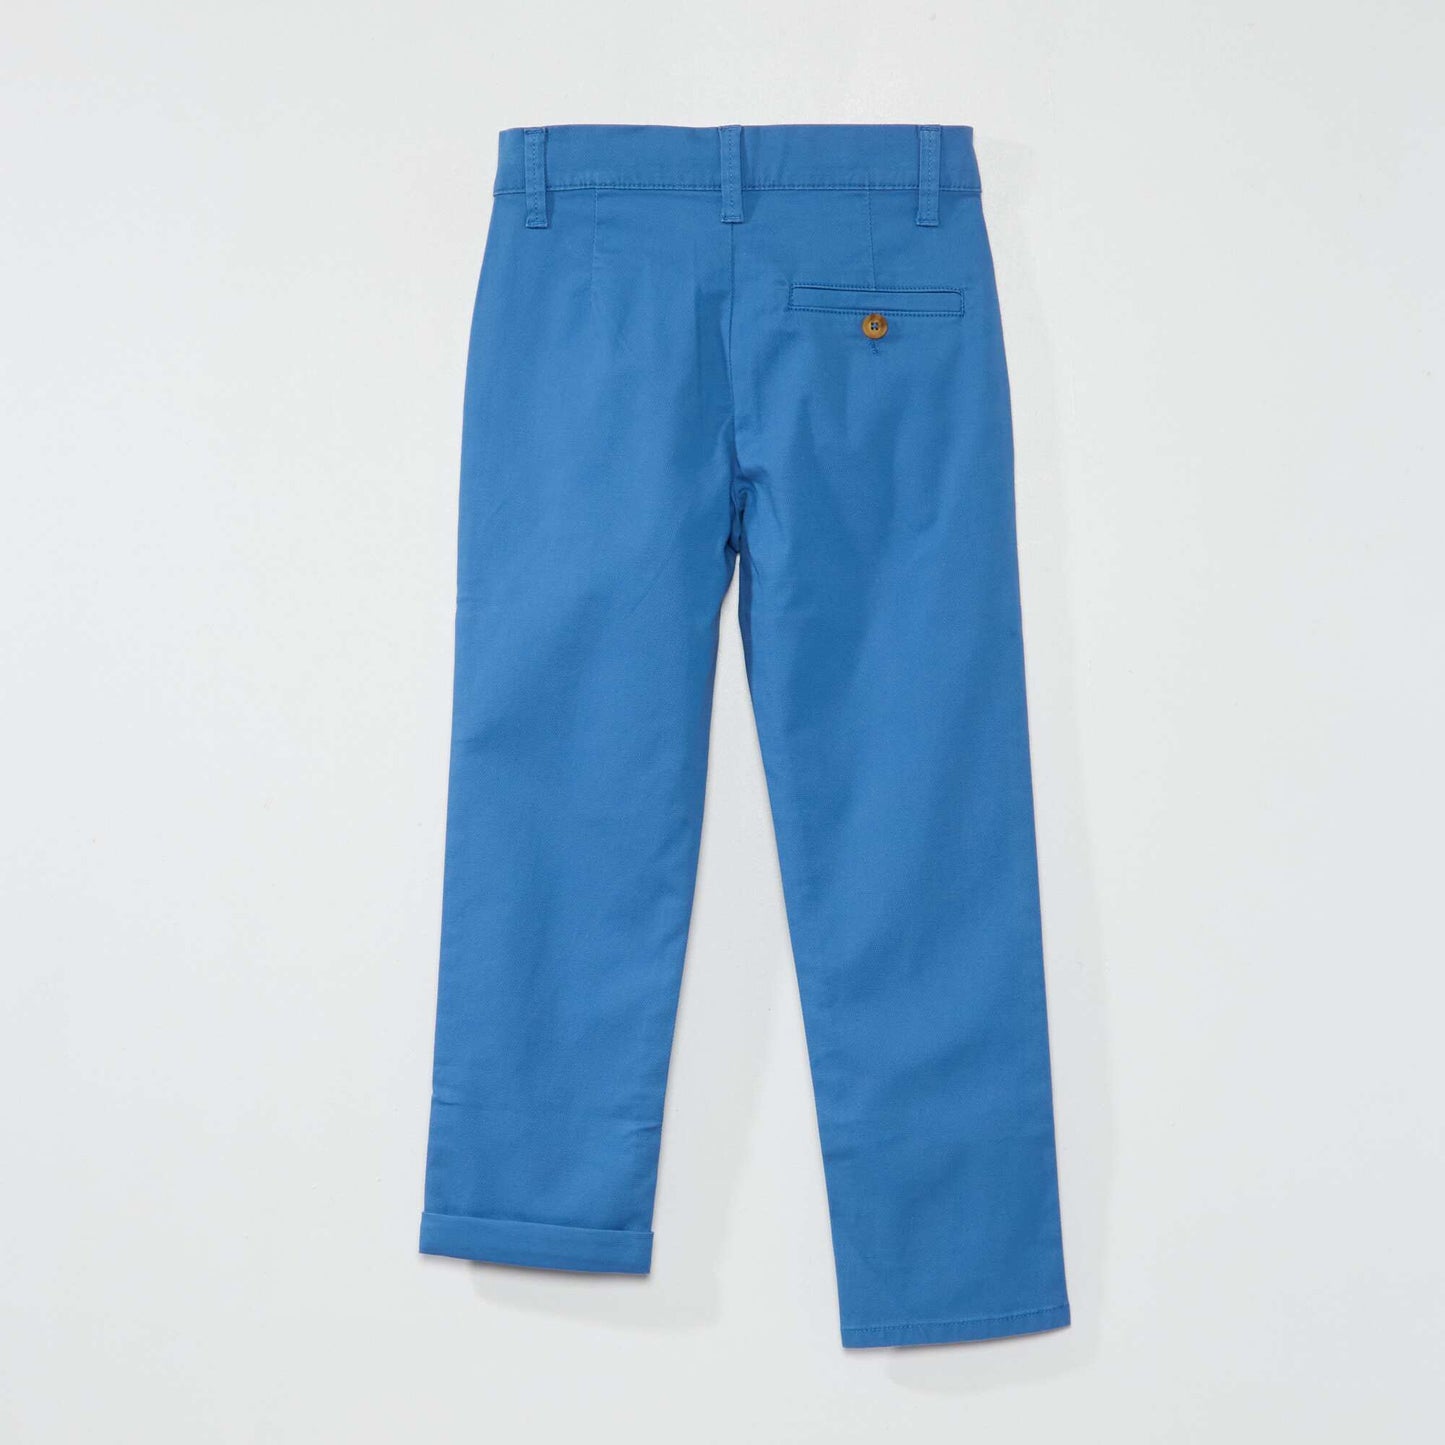 Pantalon chino tapered bleu saphir